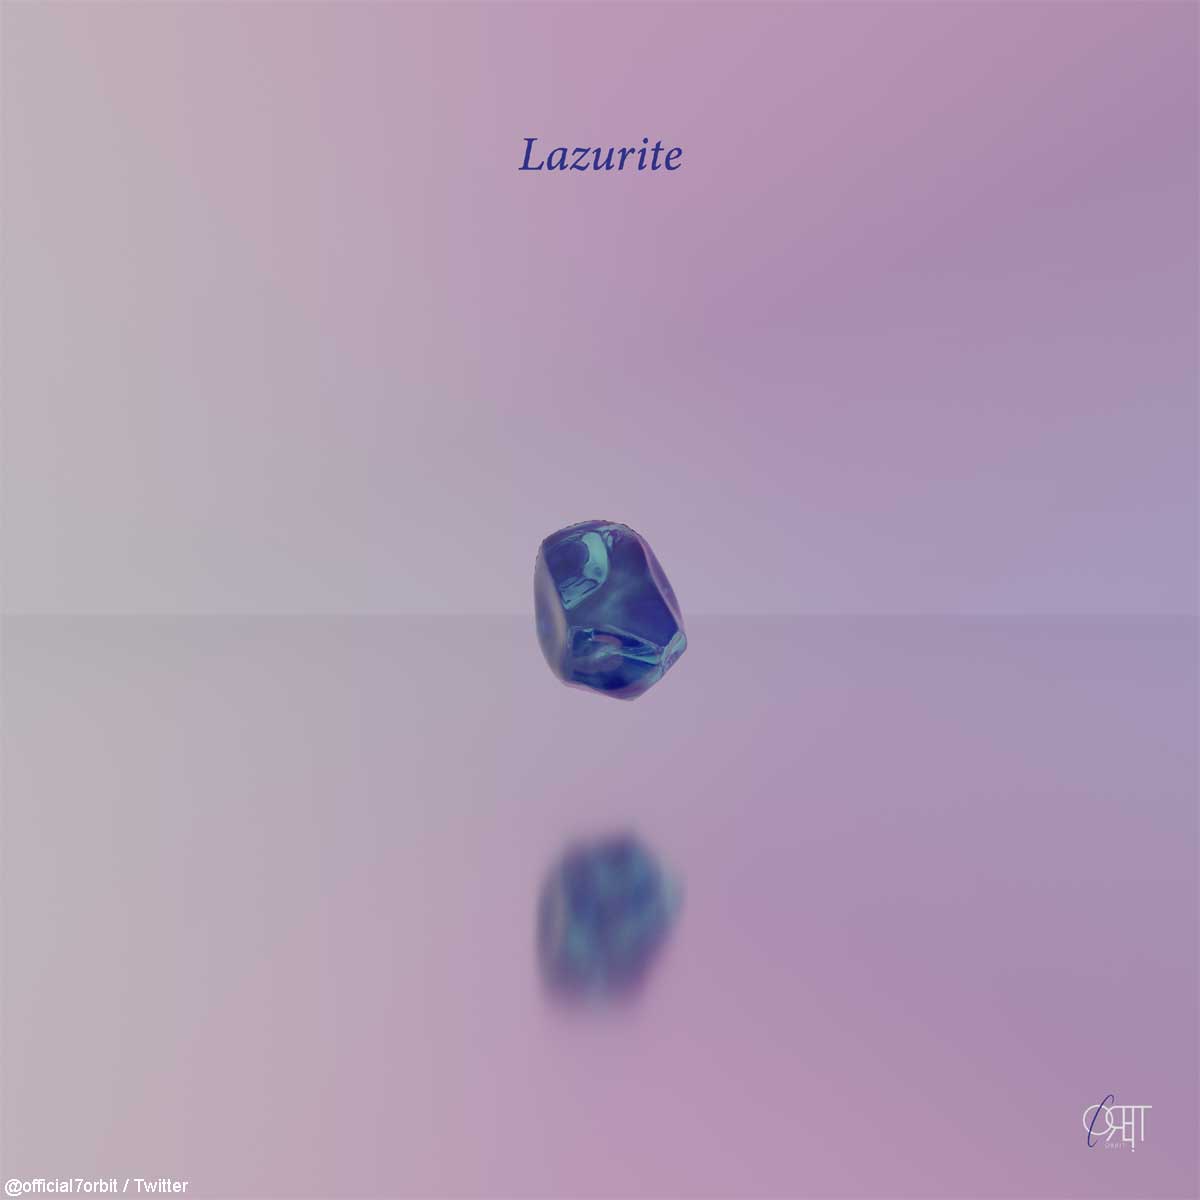 Orbit 新曲 Lazurite を電撃公開 切なく儚い声で歌い上げた珠玉のバラードにファン号泣 Kpop Monster